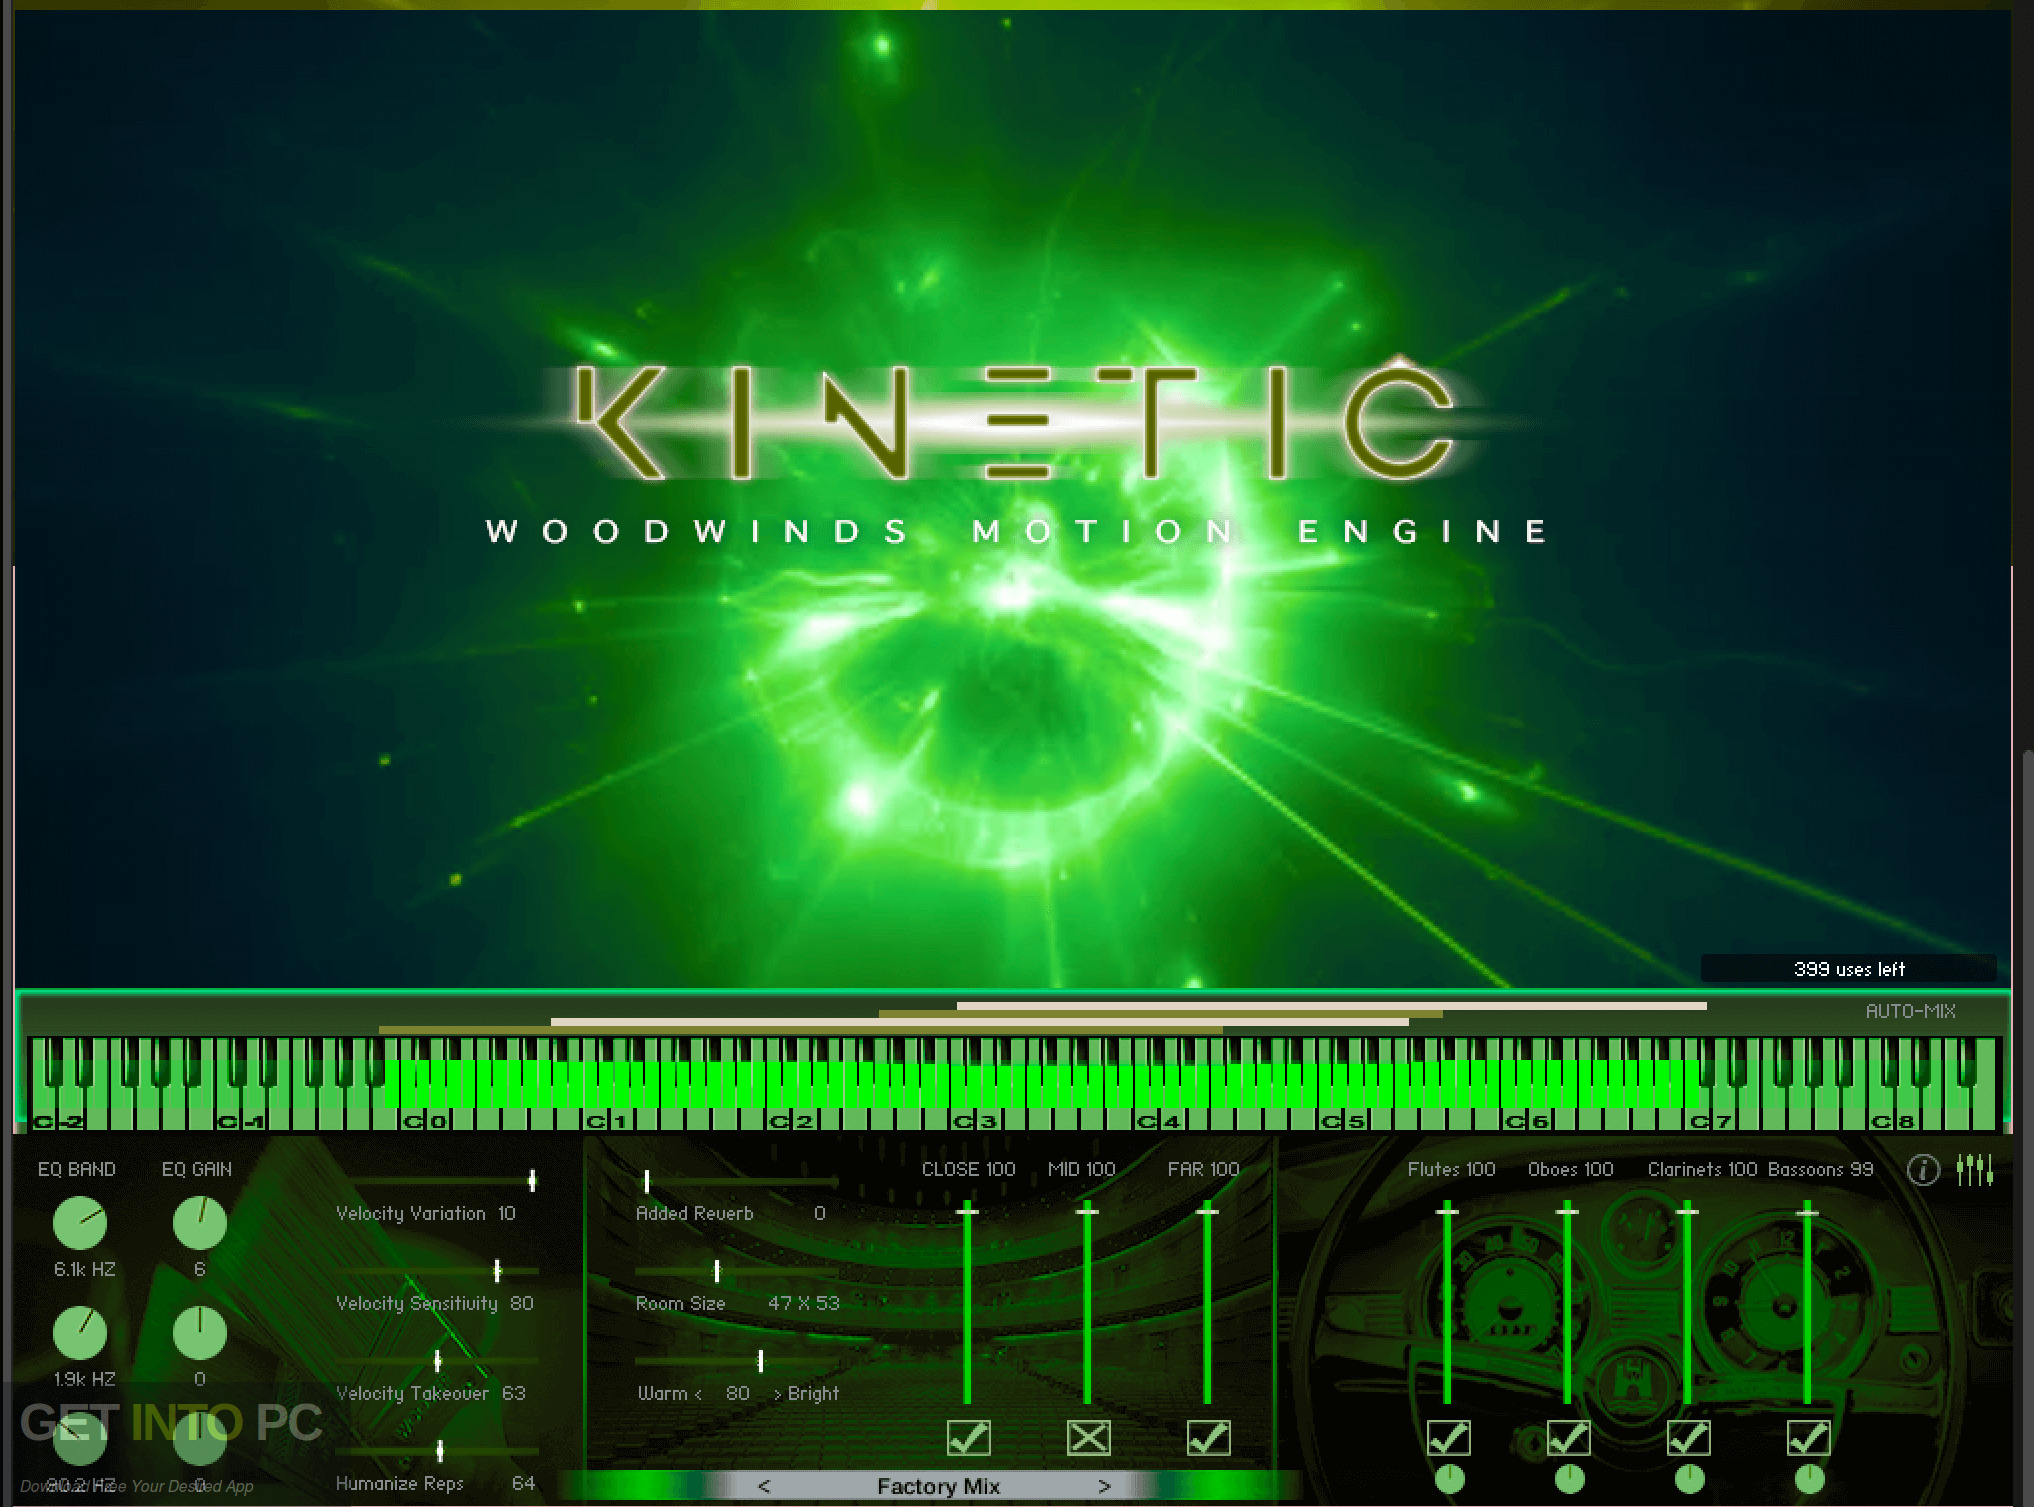 Get Into PC » Kirk Hunter Studios – Kinetic Woodwinds Motion Engine (KONTAKT) Free Download